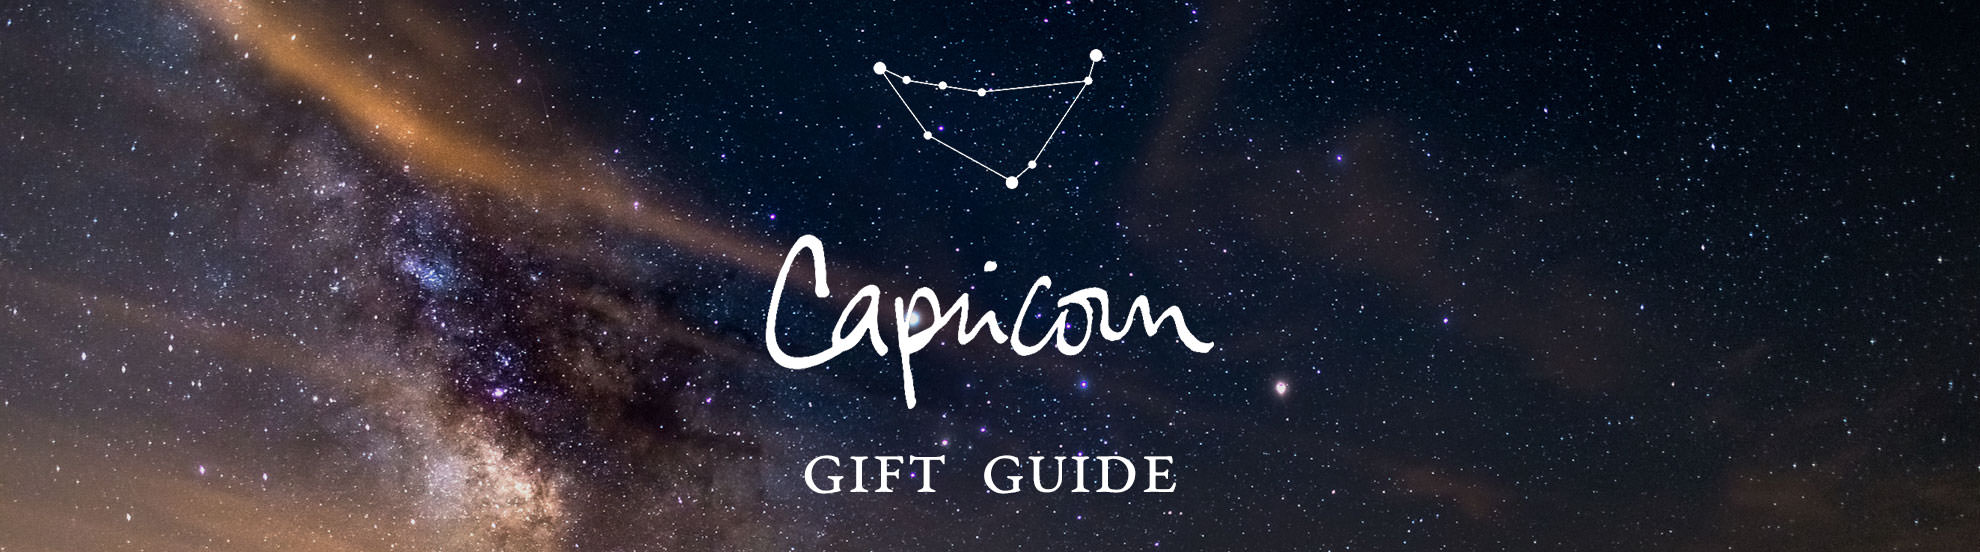 Capricorn Gift Guide